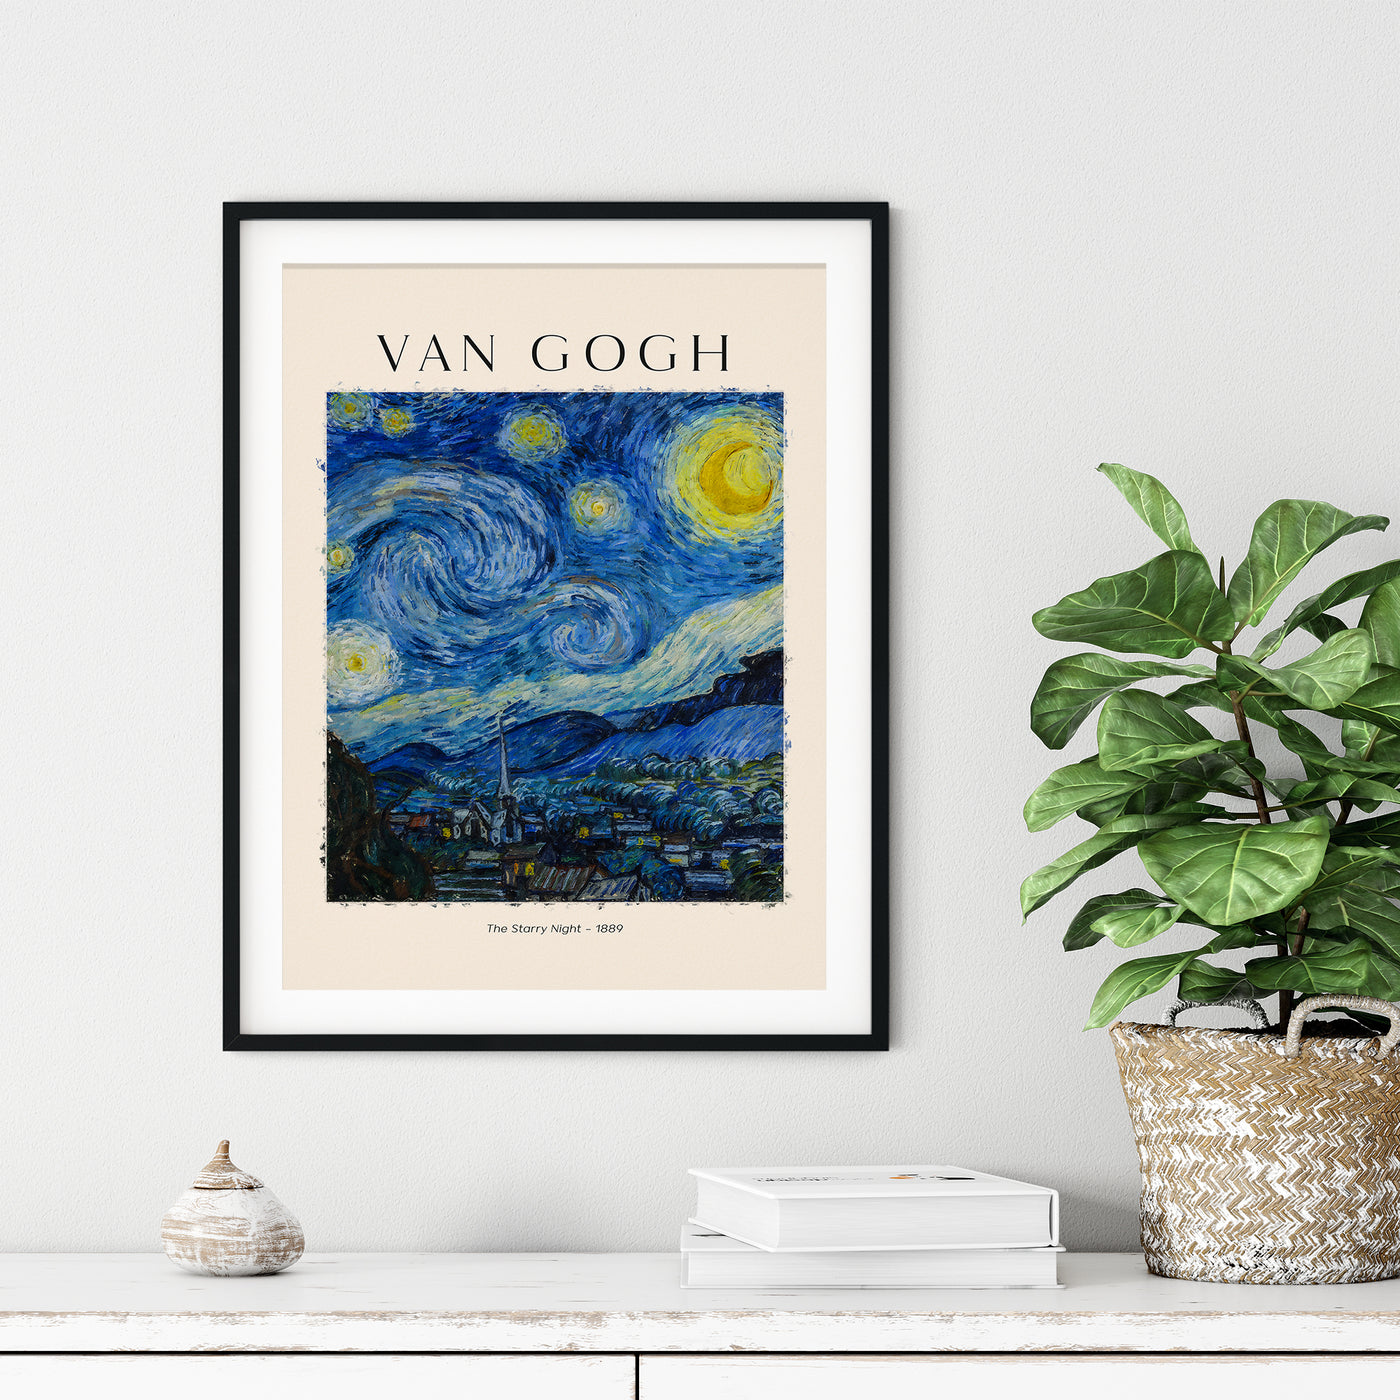 Van Gogh - The Starry Night - 1889